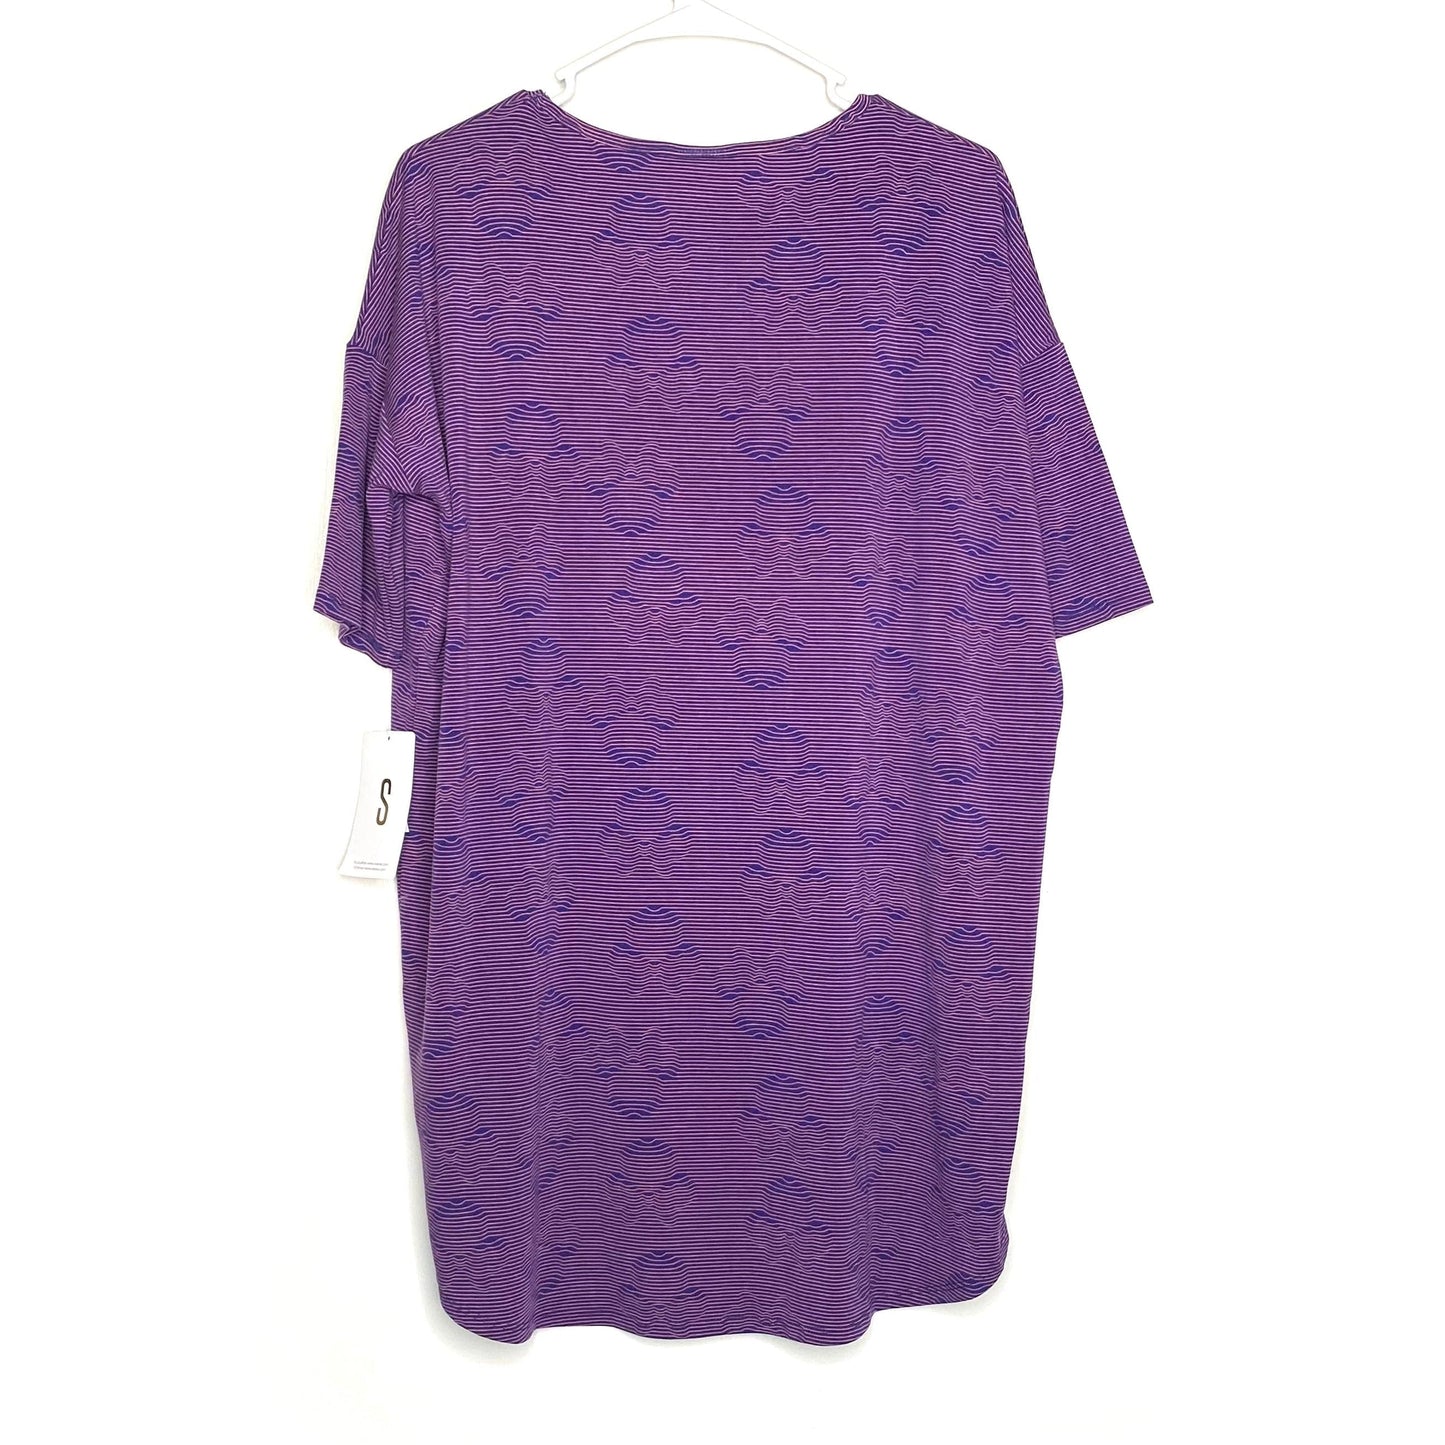 LuLaRoe Womens Size S Irma Purple Striped/Graphic T-Shirt Hidden Minnie S/s NWT